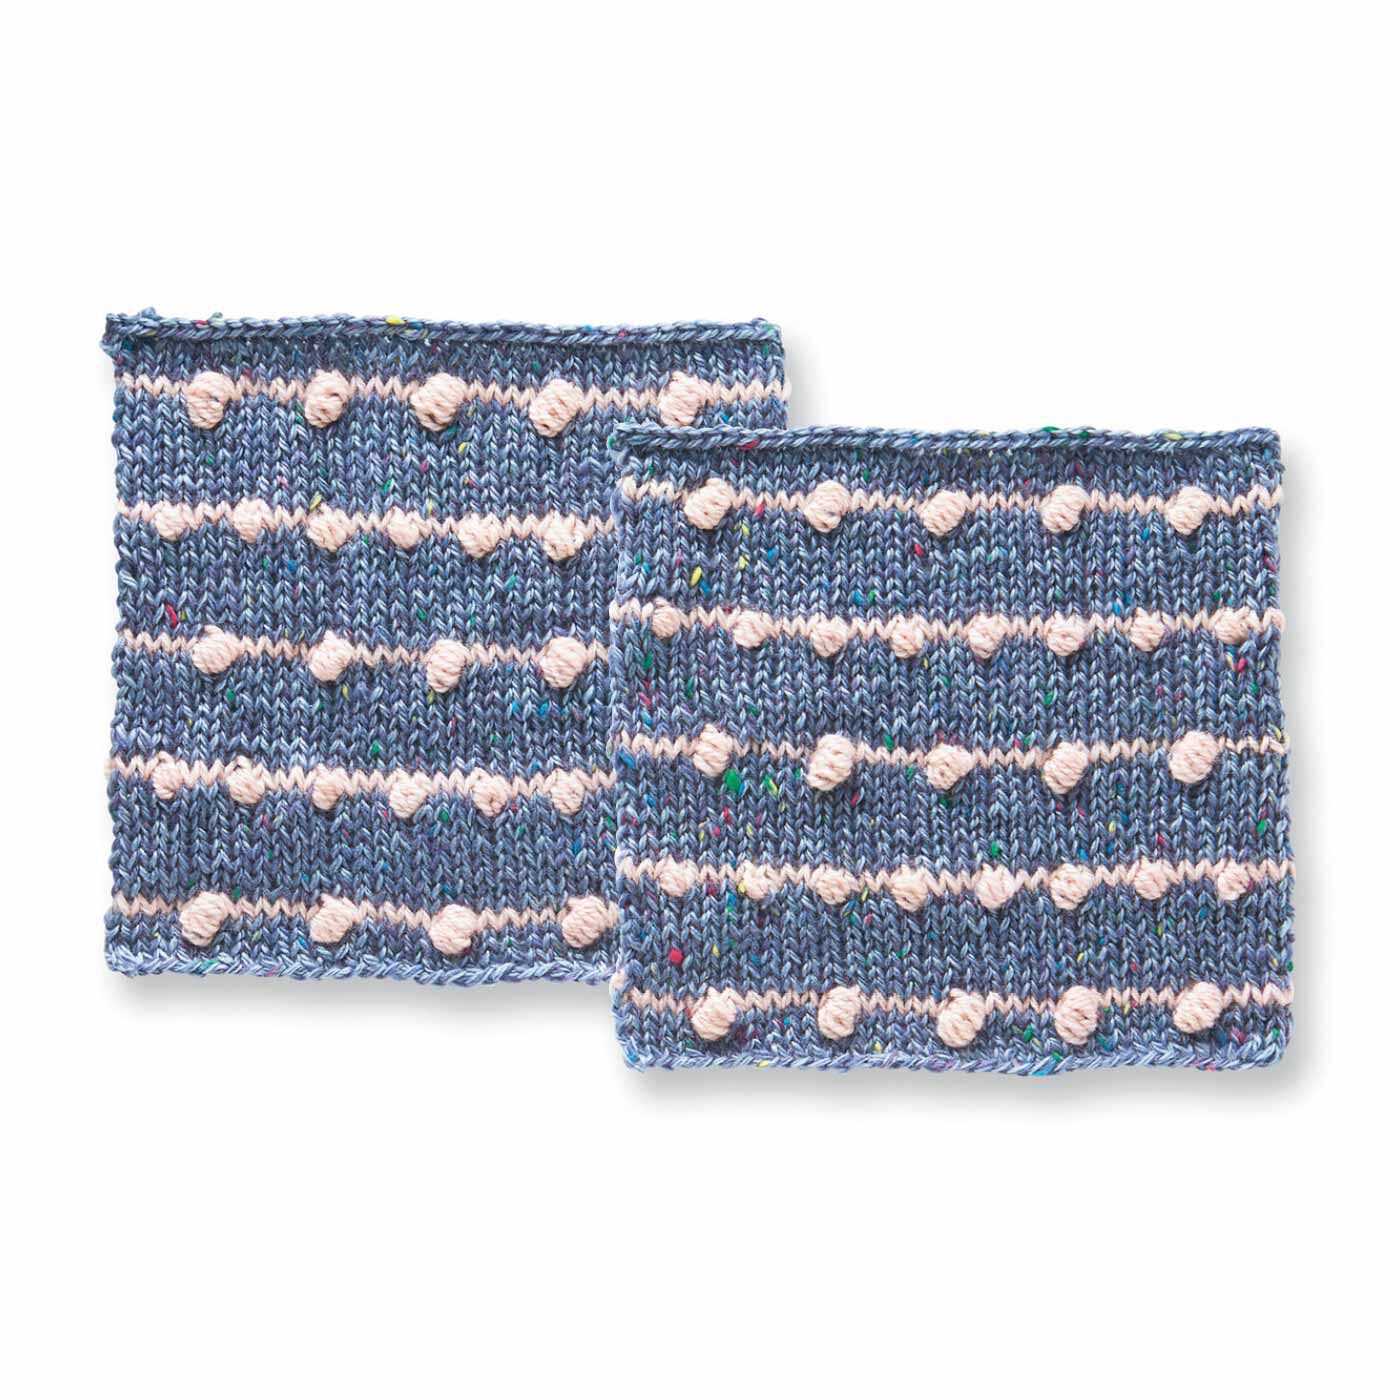 Couturier|棒針編みの沼にはまる ユニーク編み地のサンプラーの会|ほの甘ボッブル編みボーダー